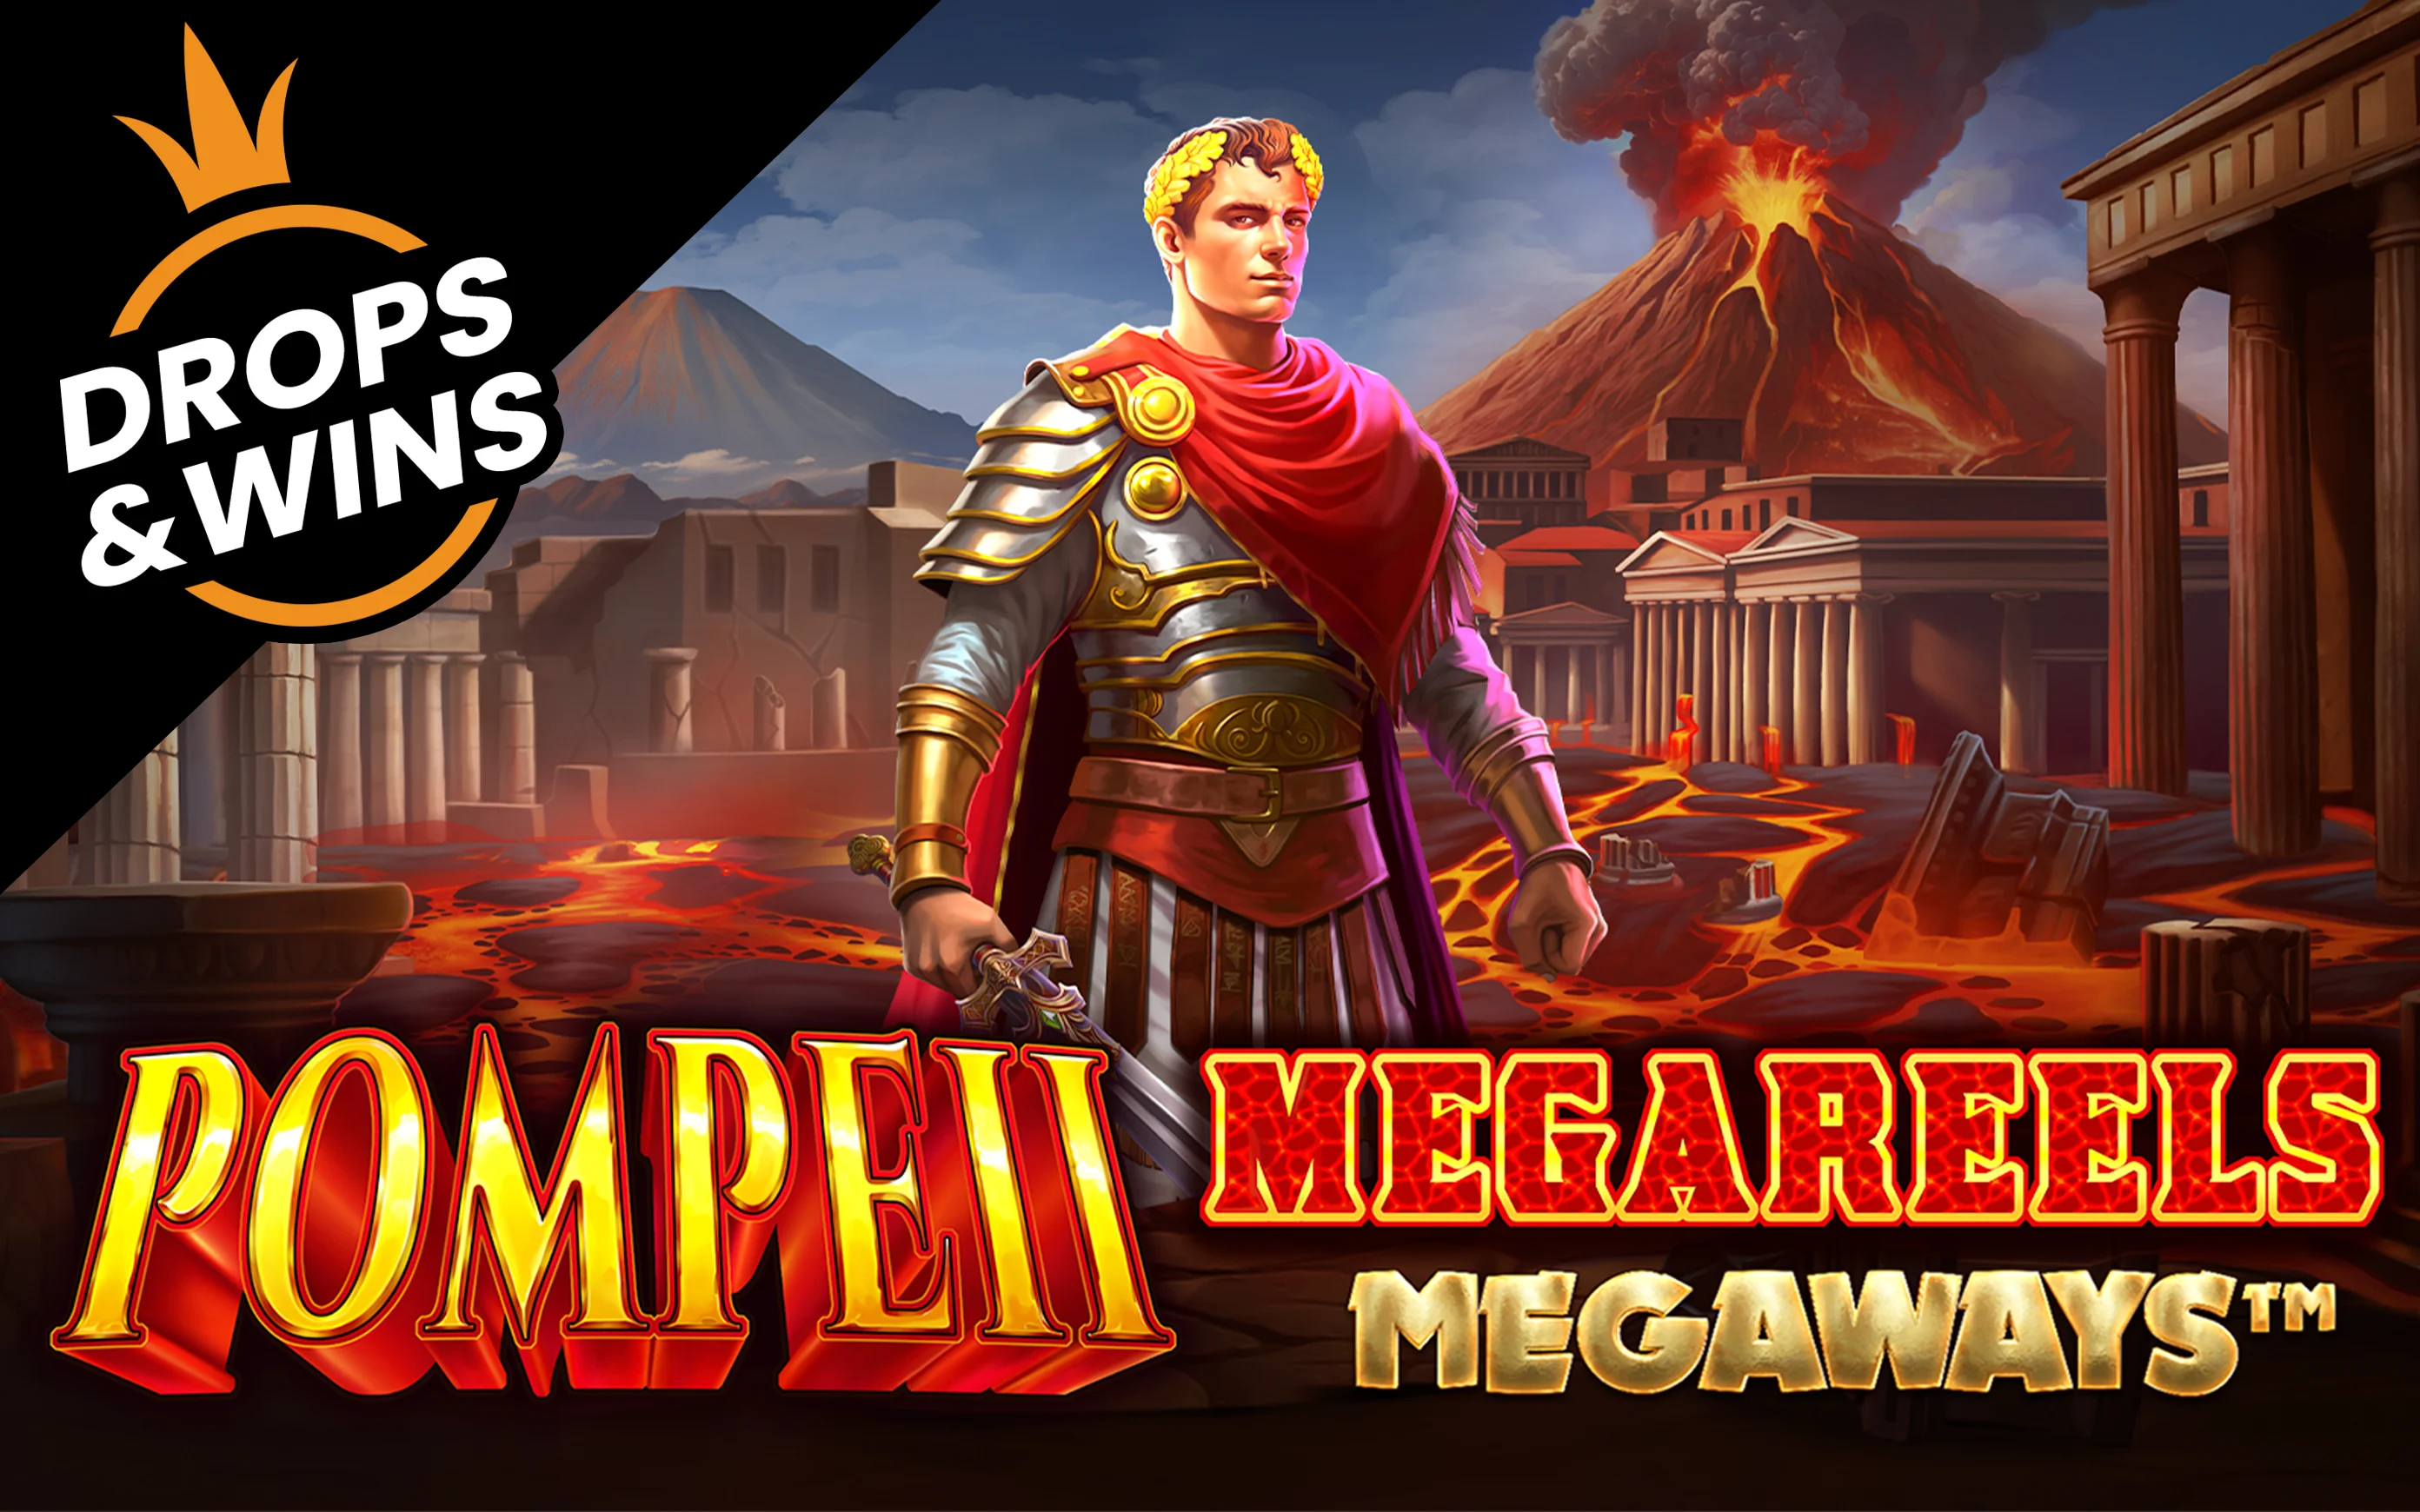 Gioca a Pompeii Megareels Megaways™ sul casino online Starcasino.be